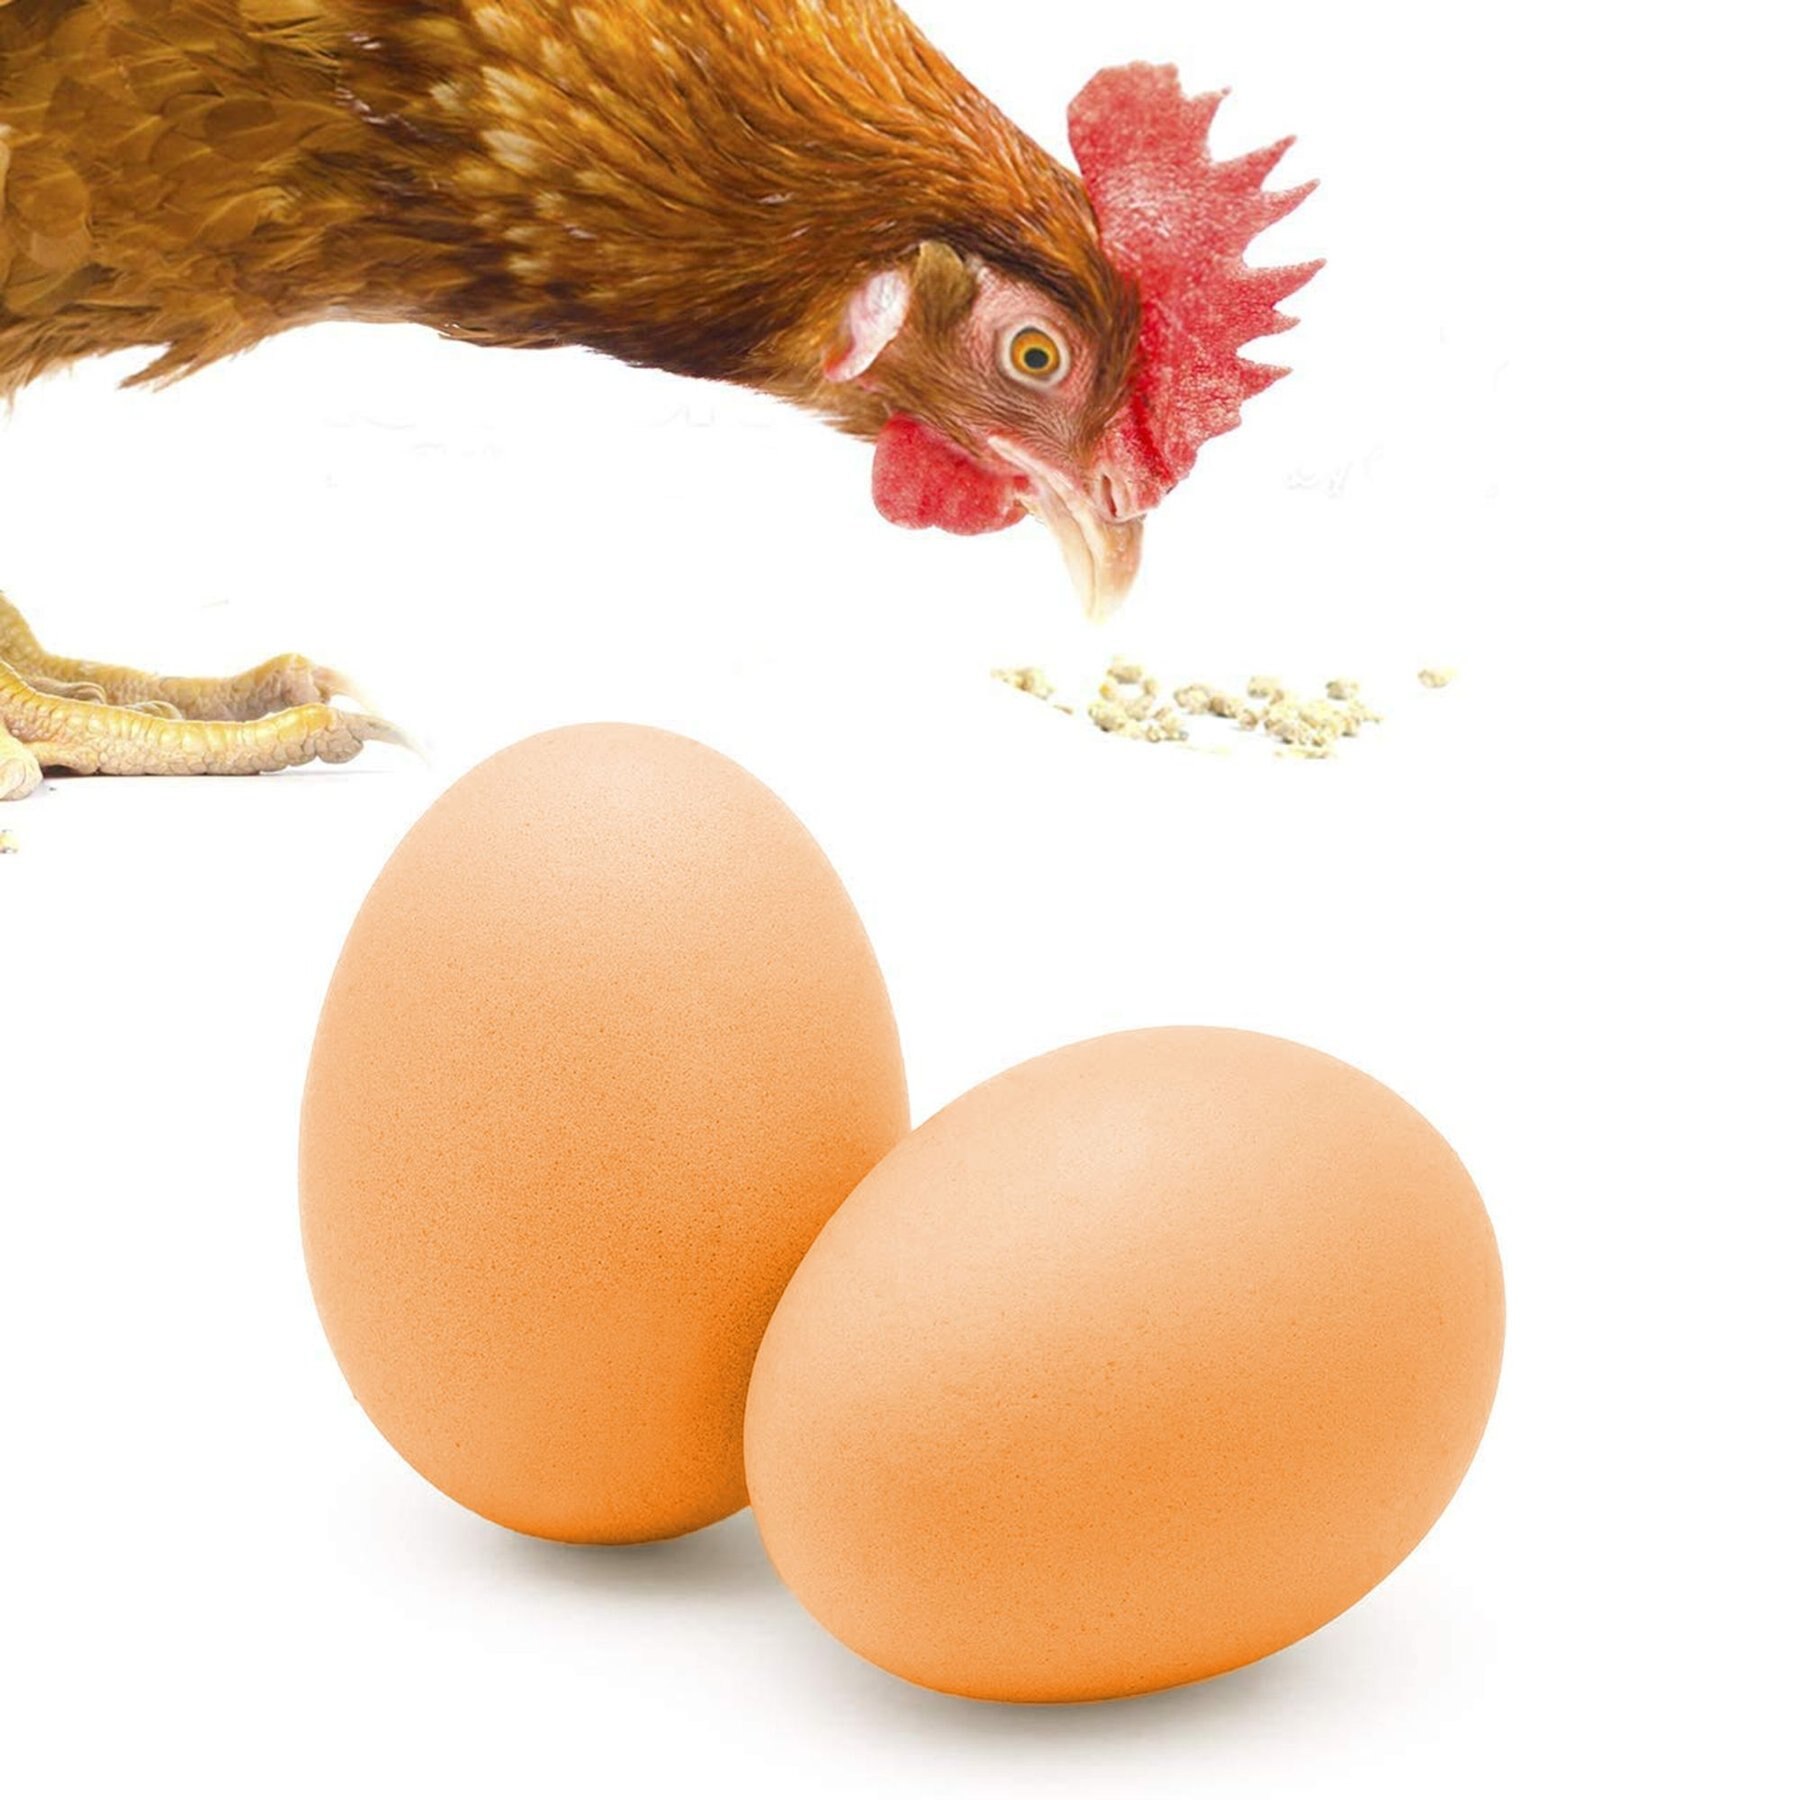 25 Hole Egg Shipping Foam for Turkeys, Geese, Ducks & Chicken Eggs